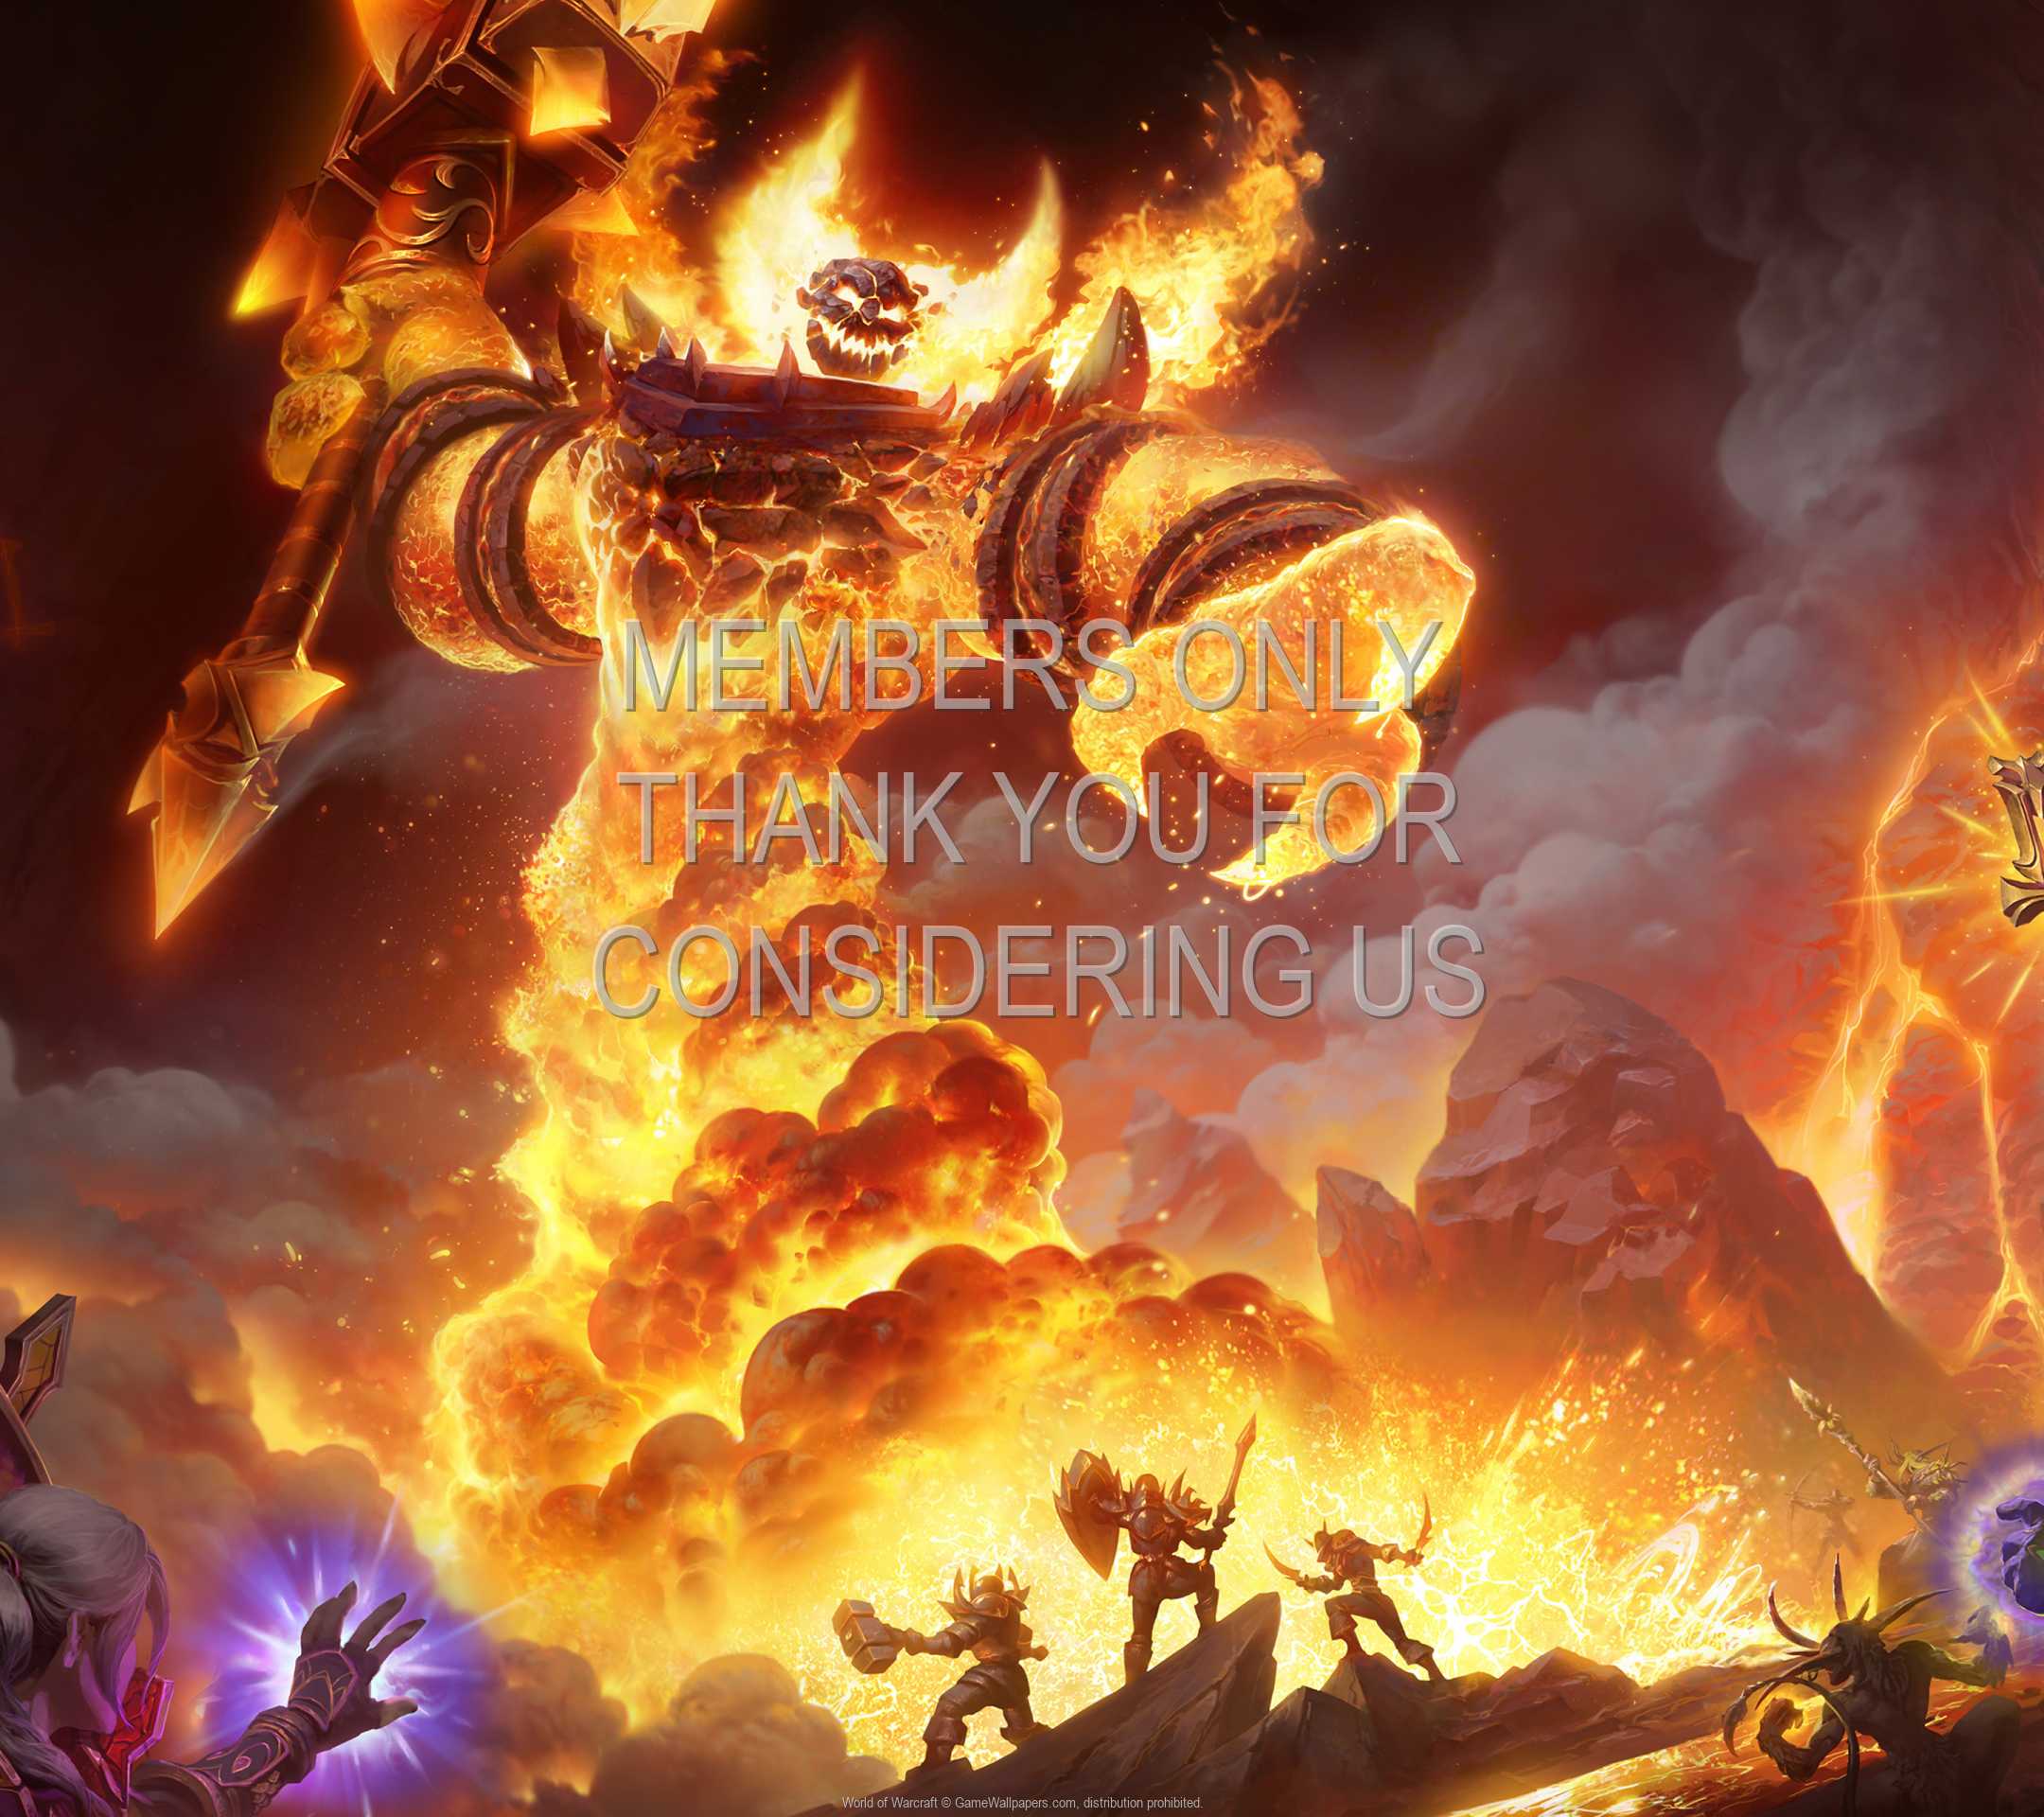 World of Warcraft 1080p Horizontal Mobile wallpaper or background 18